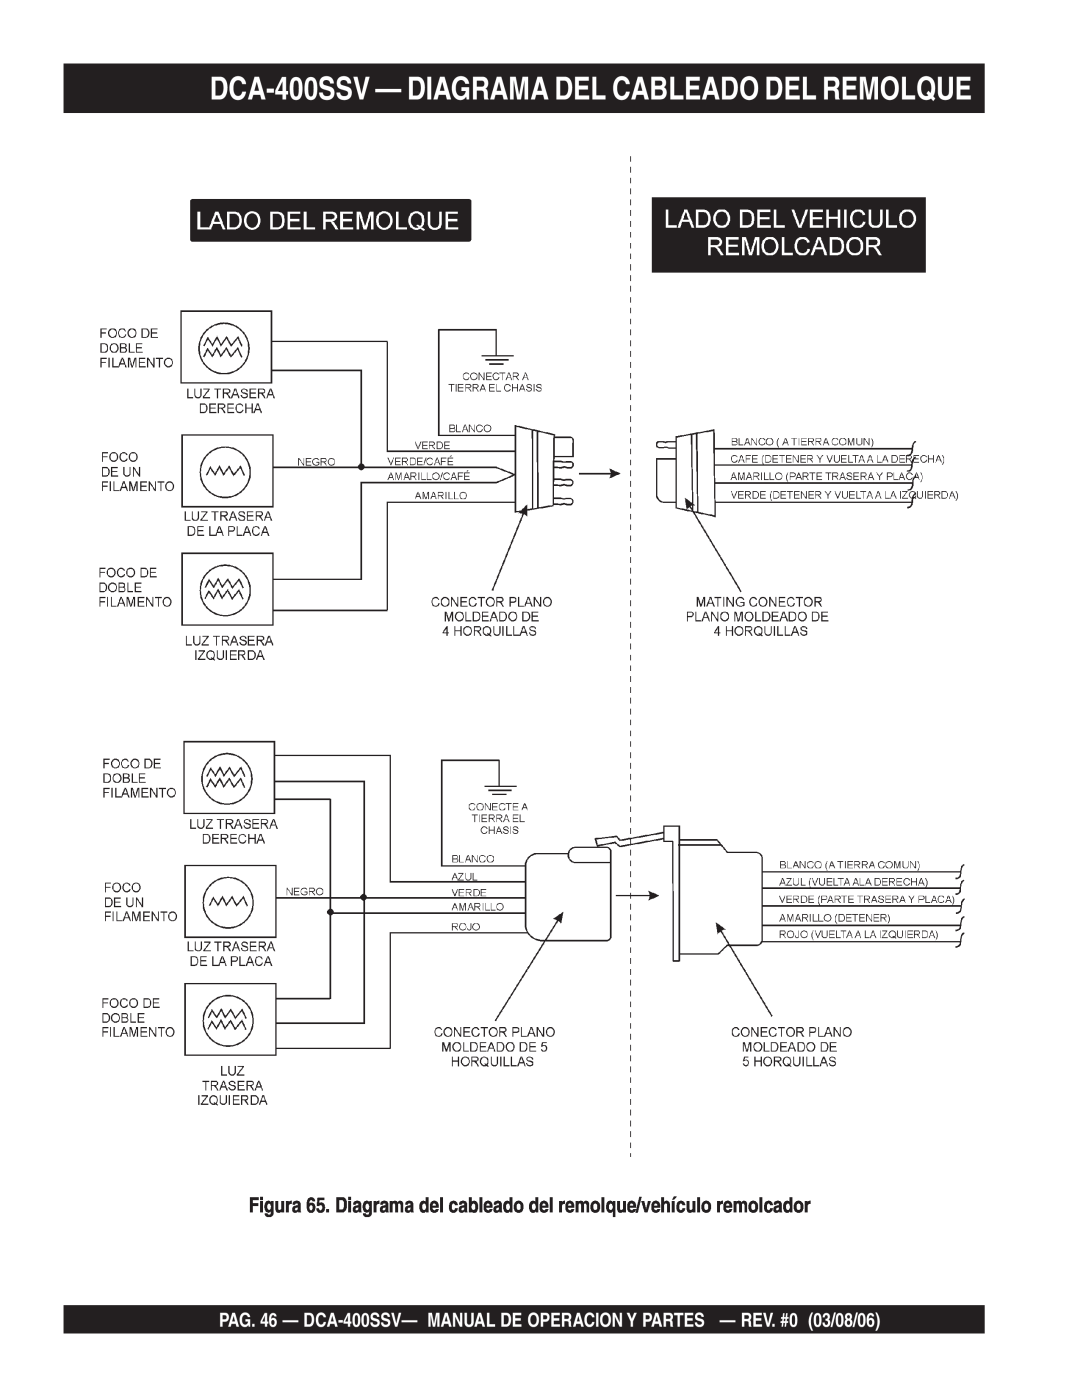 Multiquip operation manual DCA-400SSV— DIAGRAMA DEL CABLEADO DEL REMOLQUE 